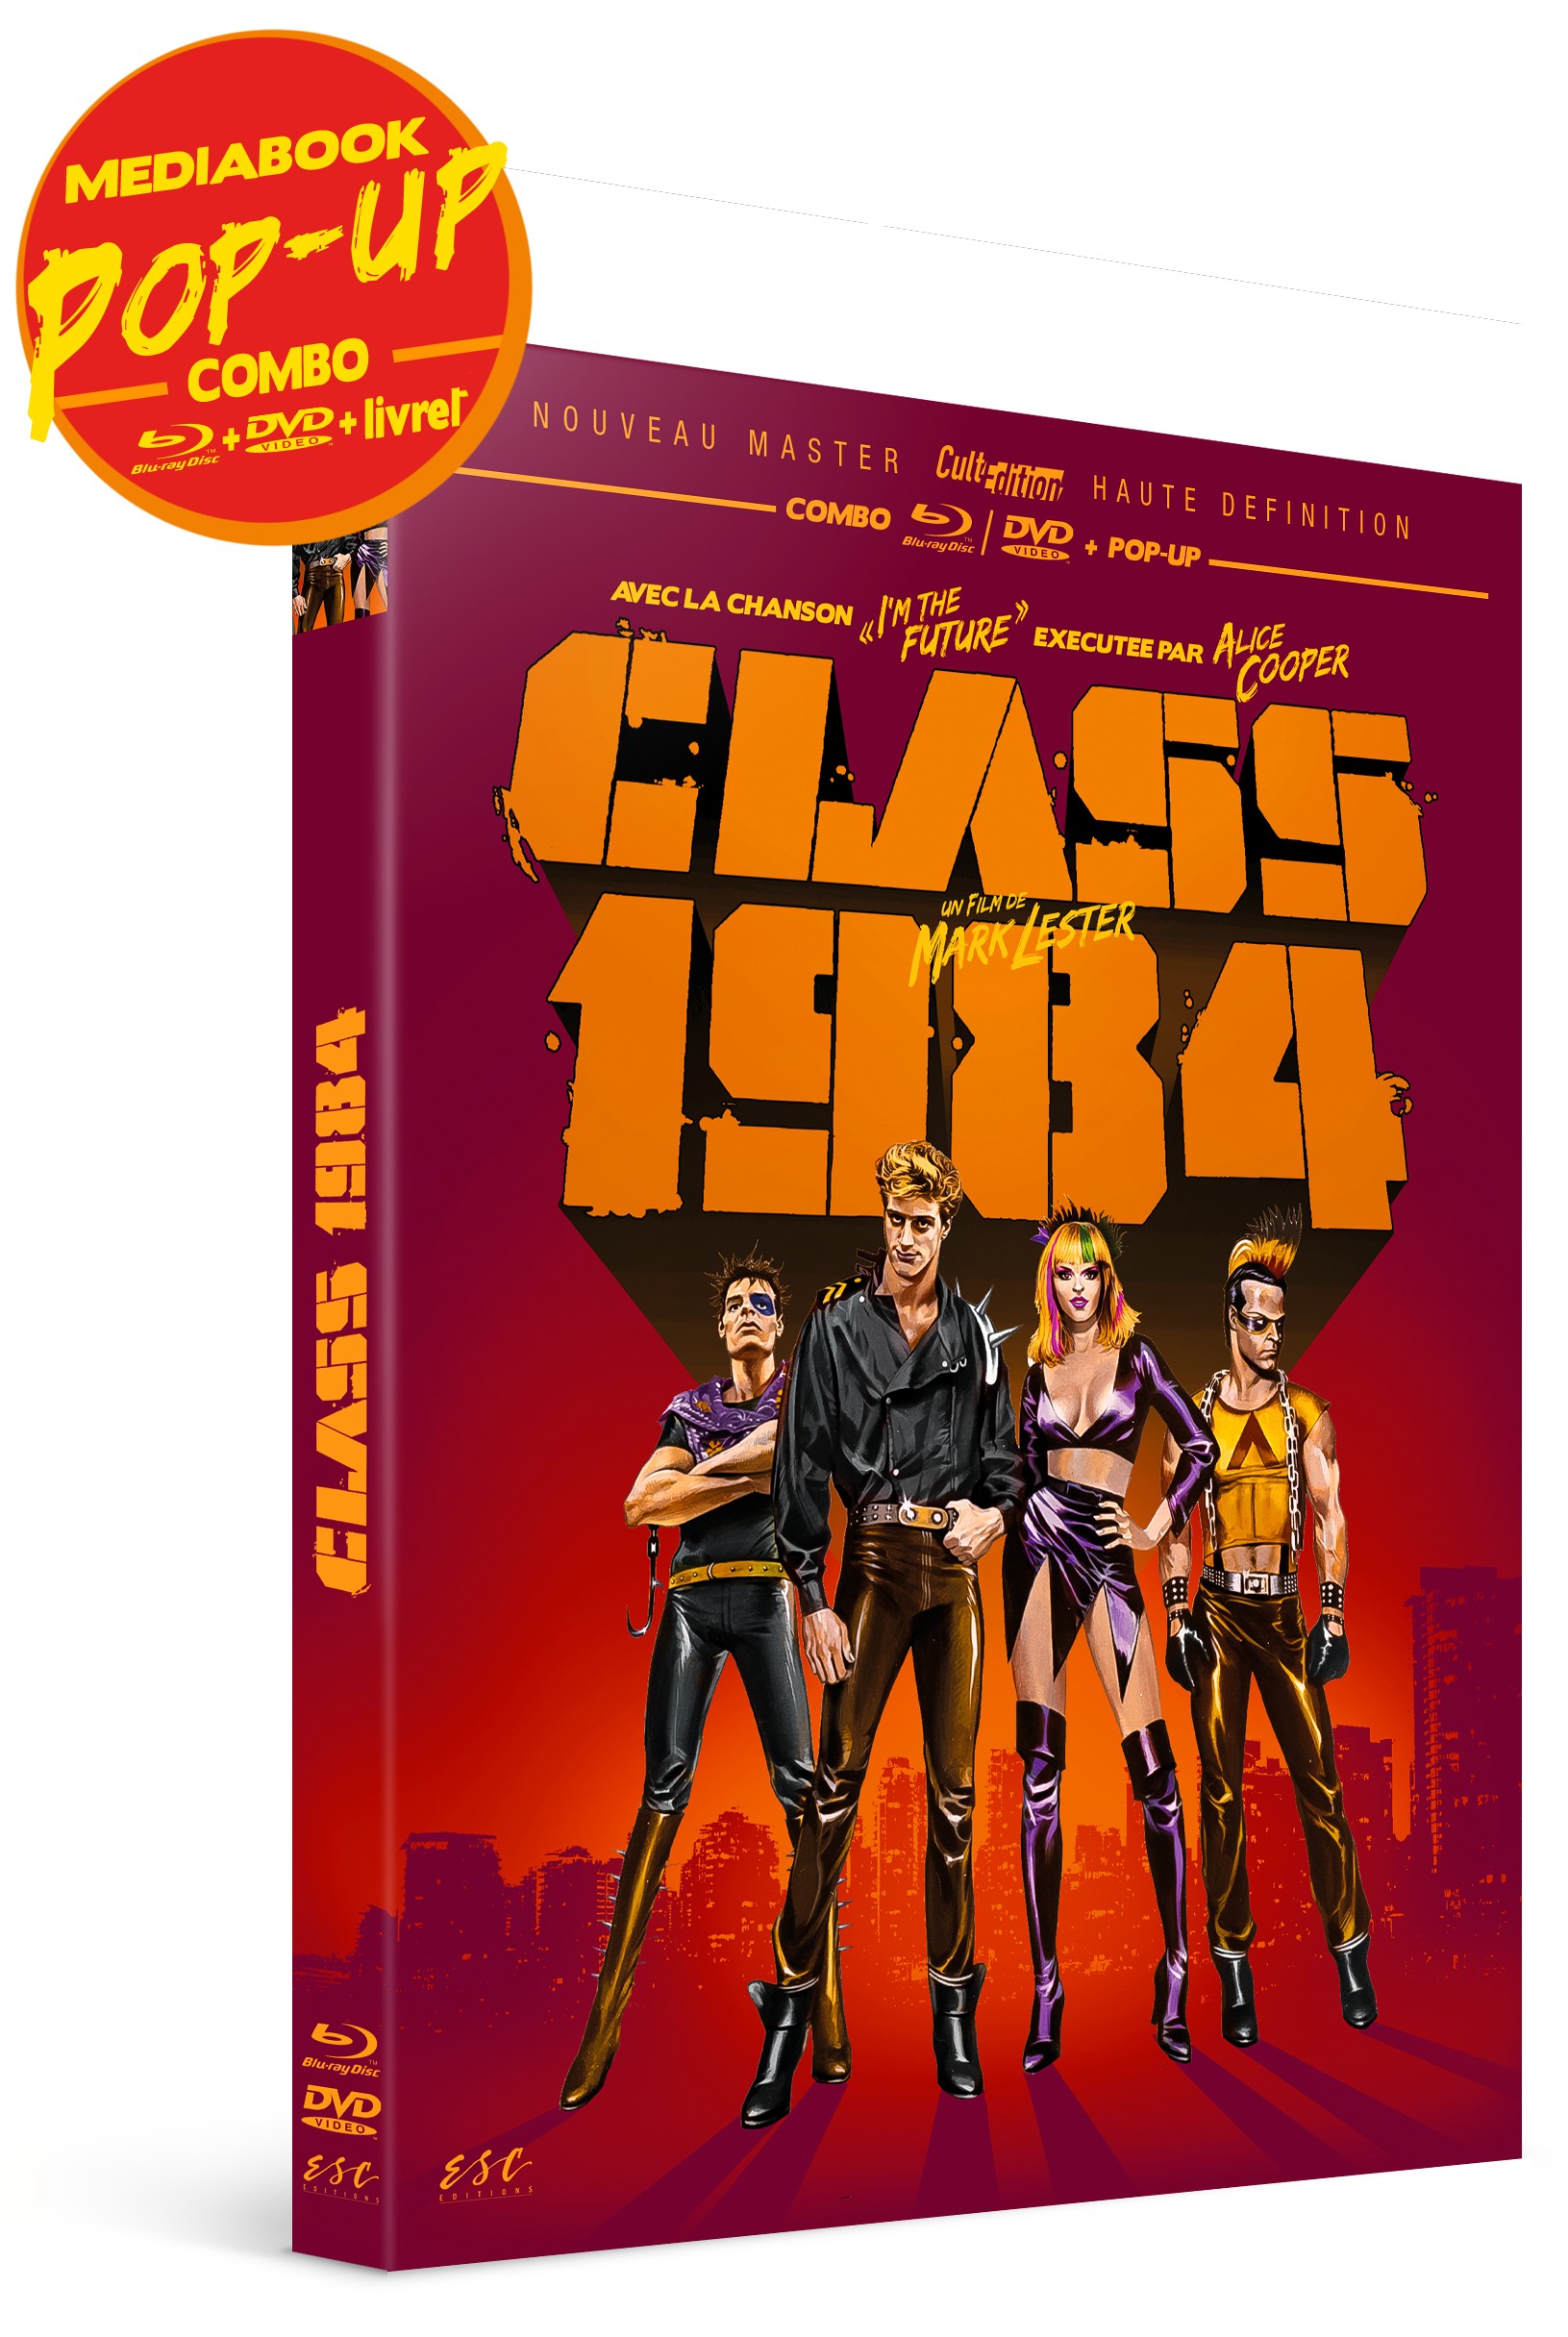 CLASS OF 1984